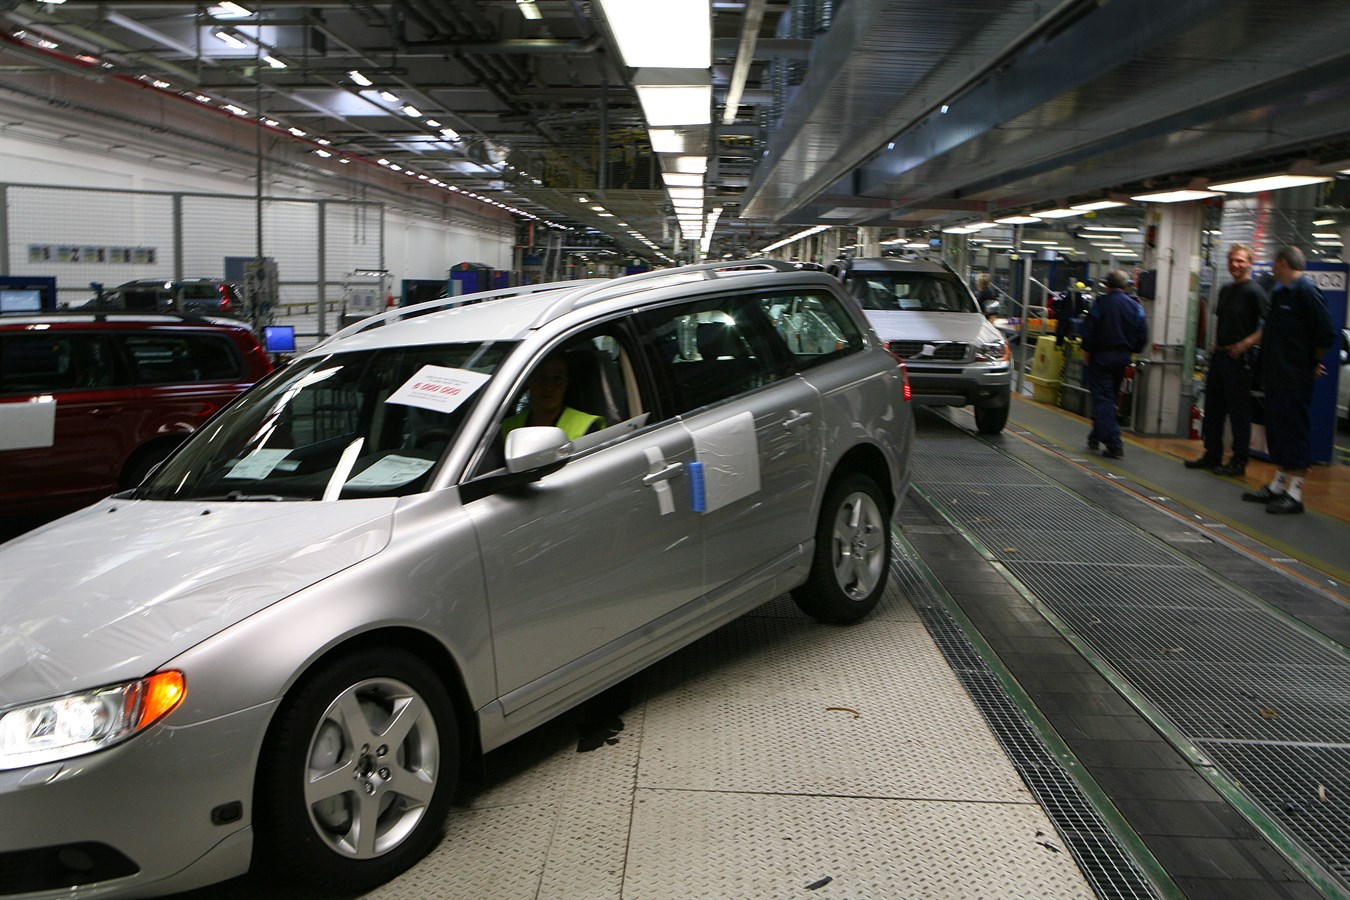 6th million car produced at Volvo Cars Torslanda